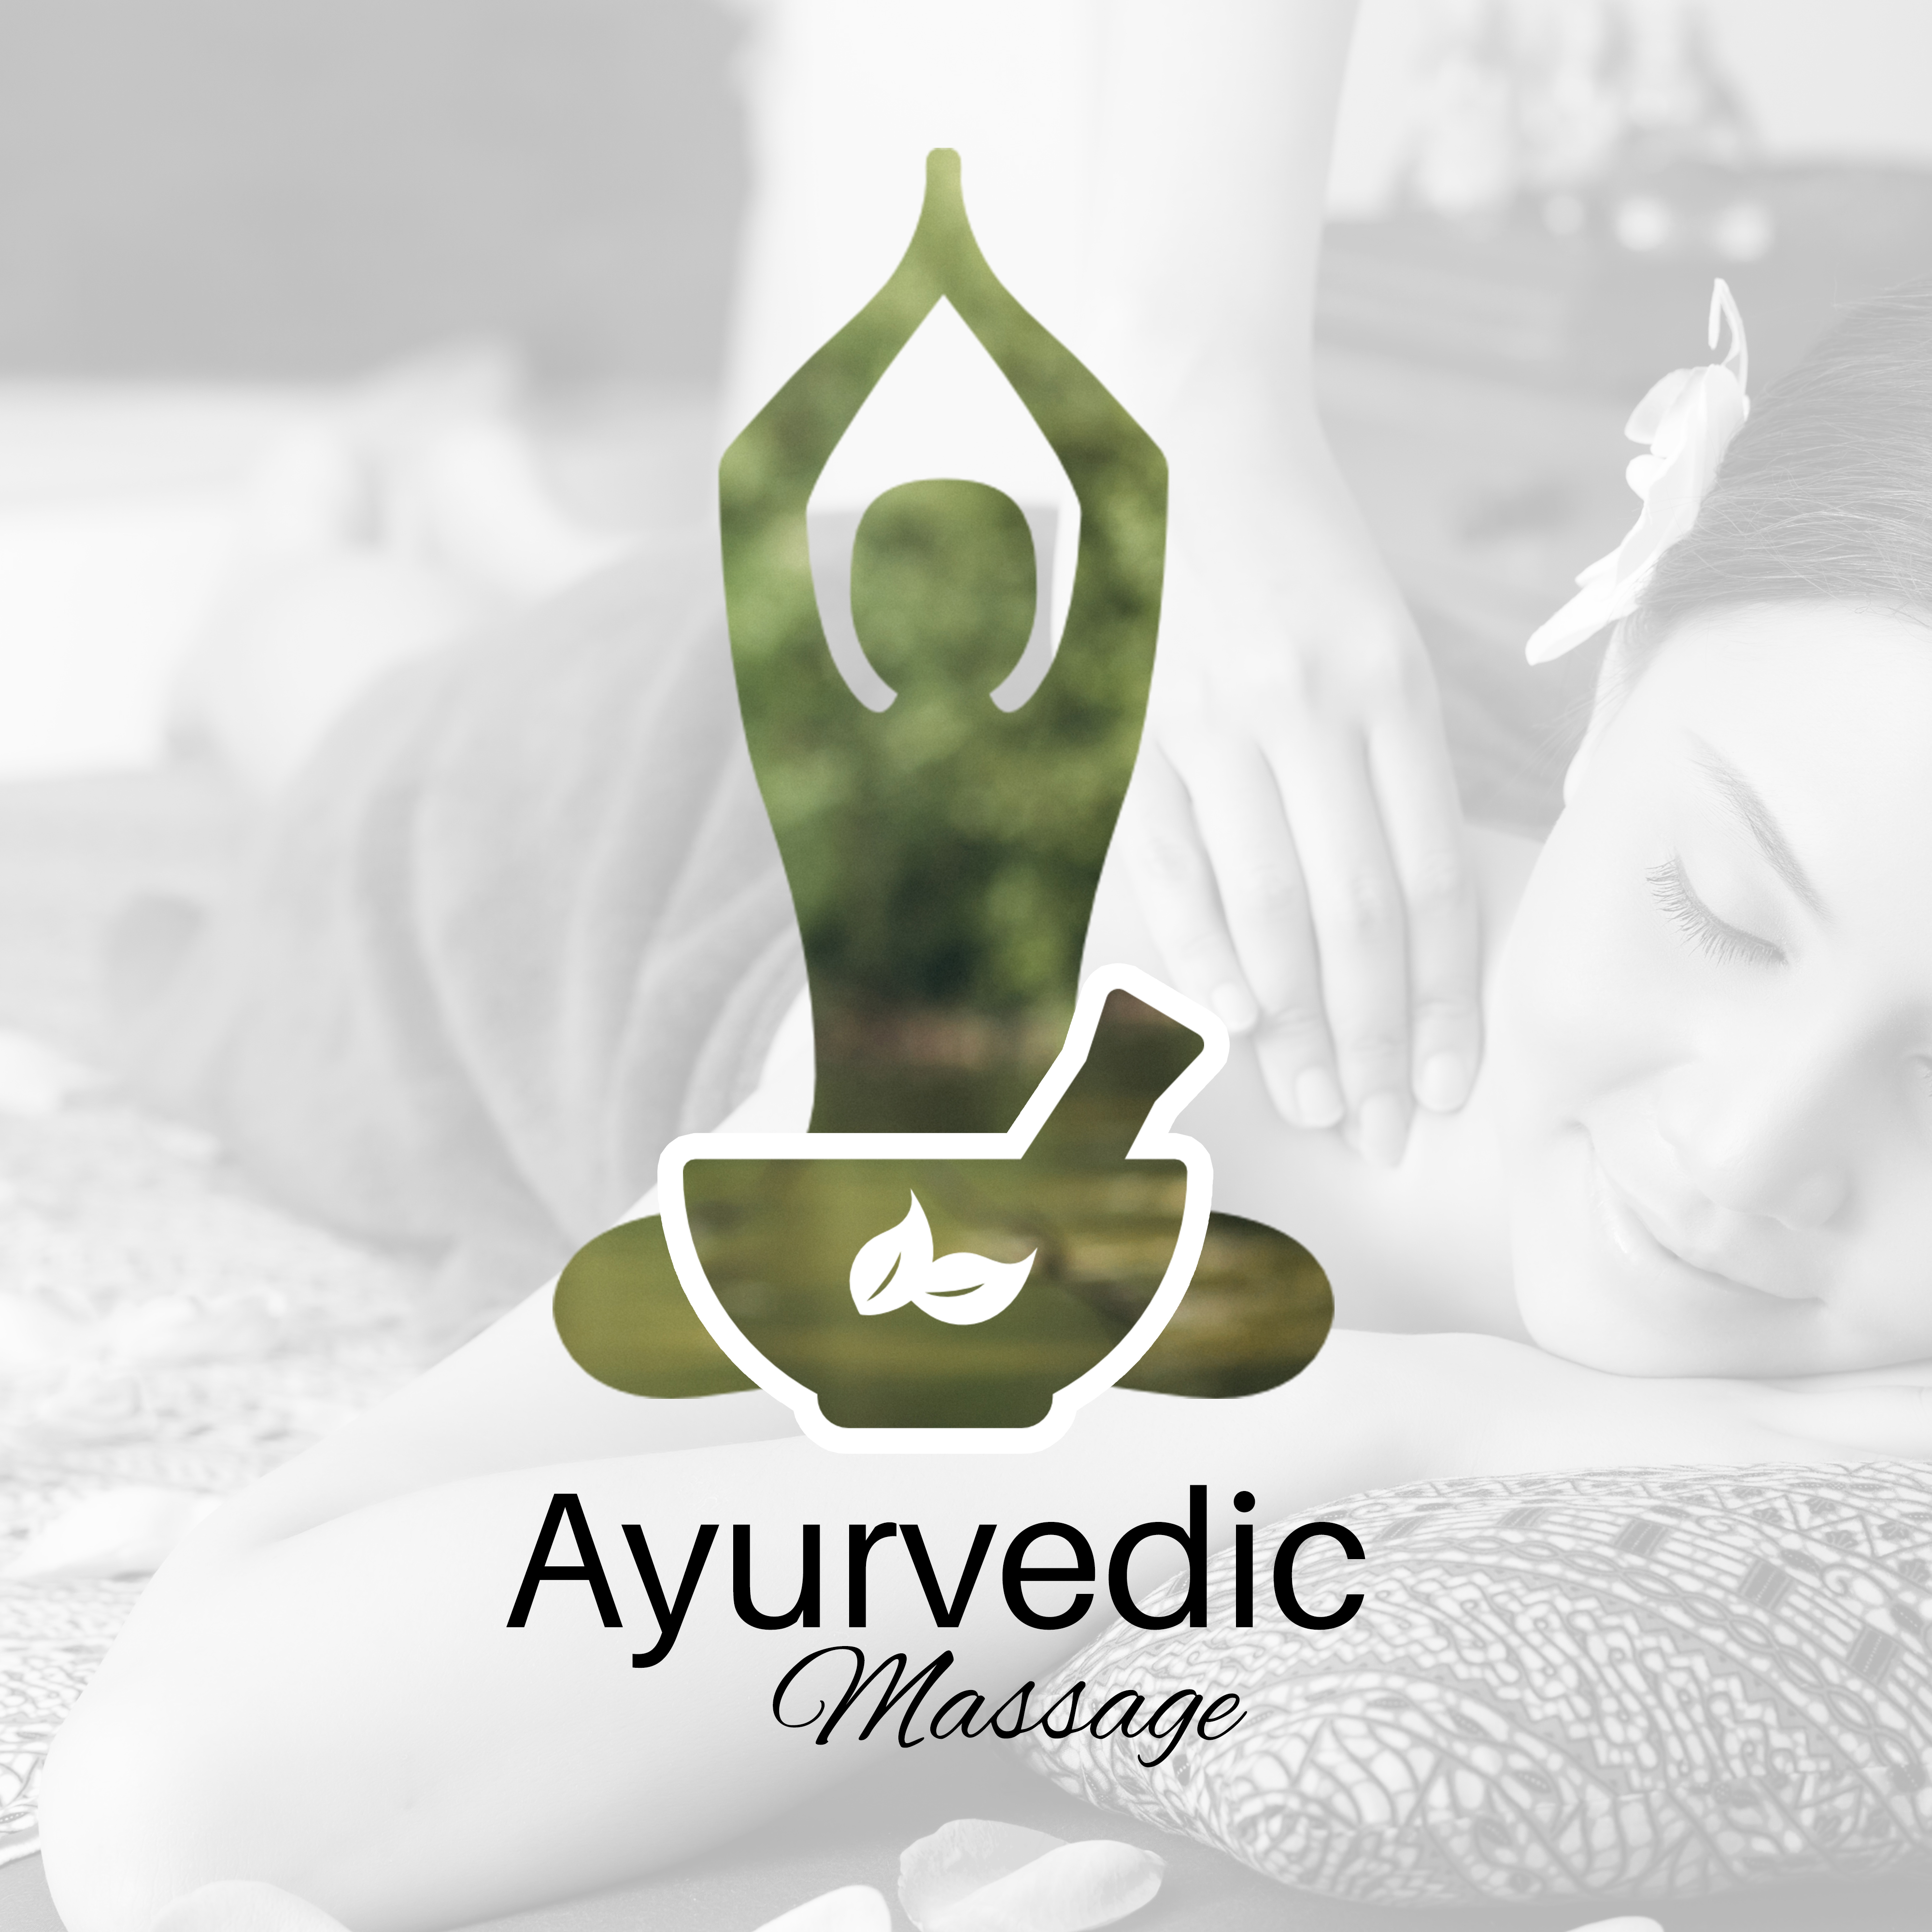 Ayurvedic Massage: Well Being and Energy